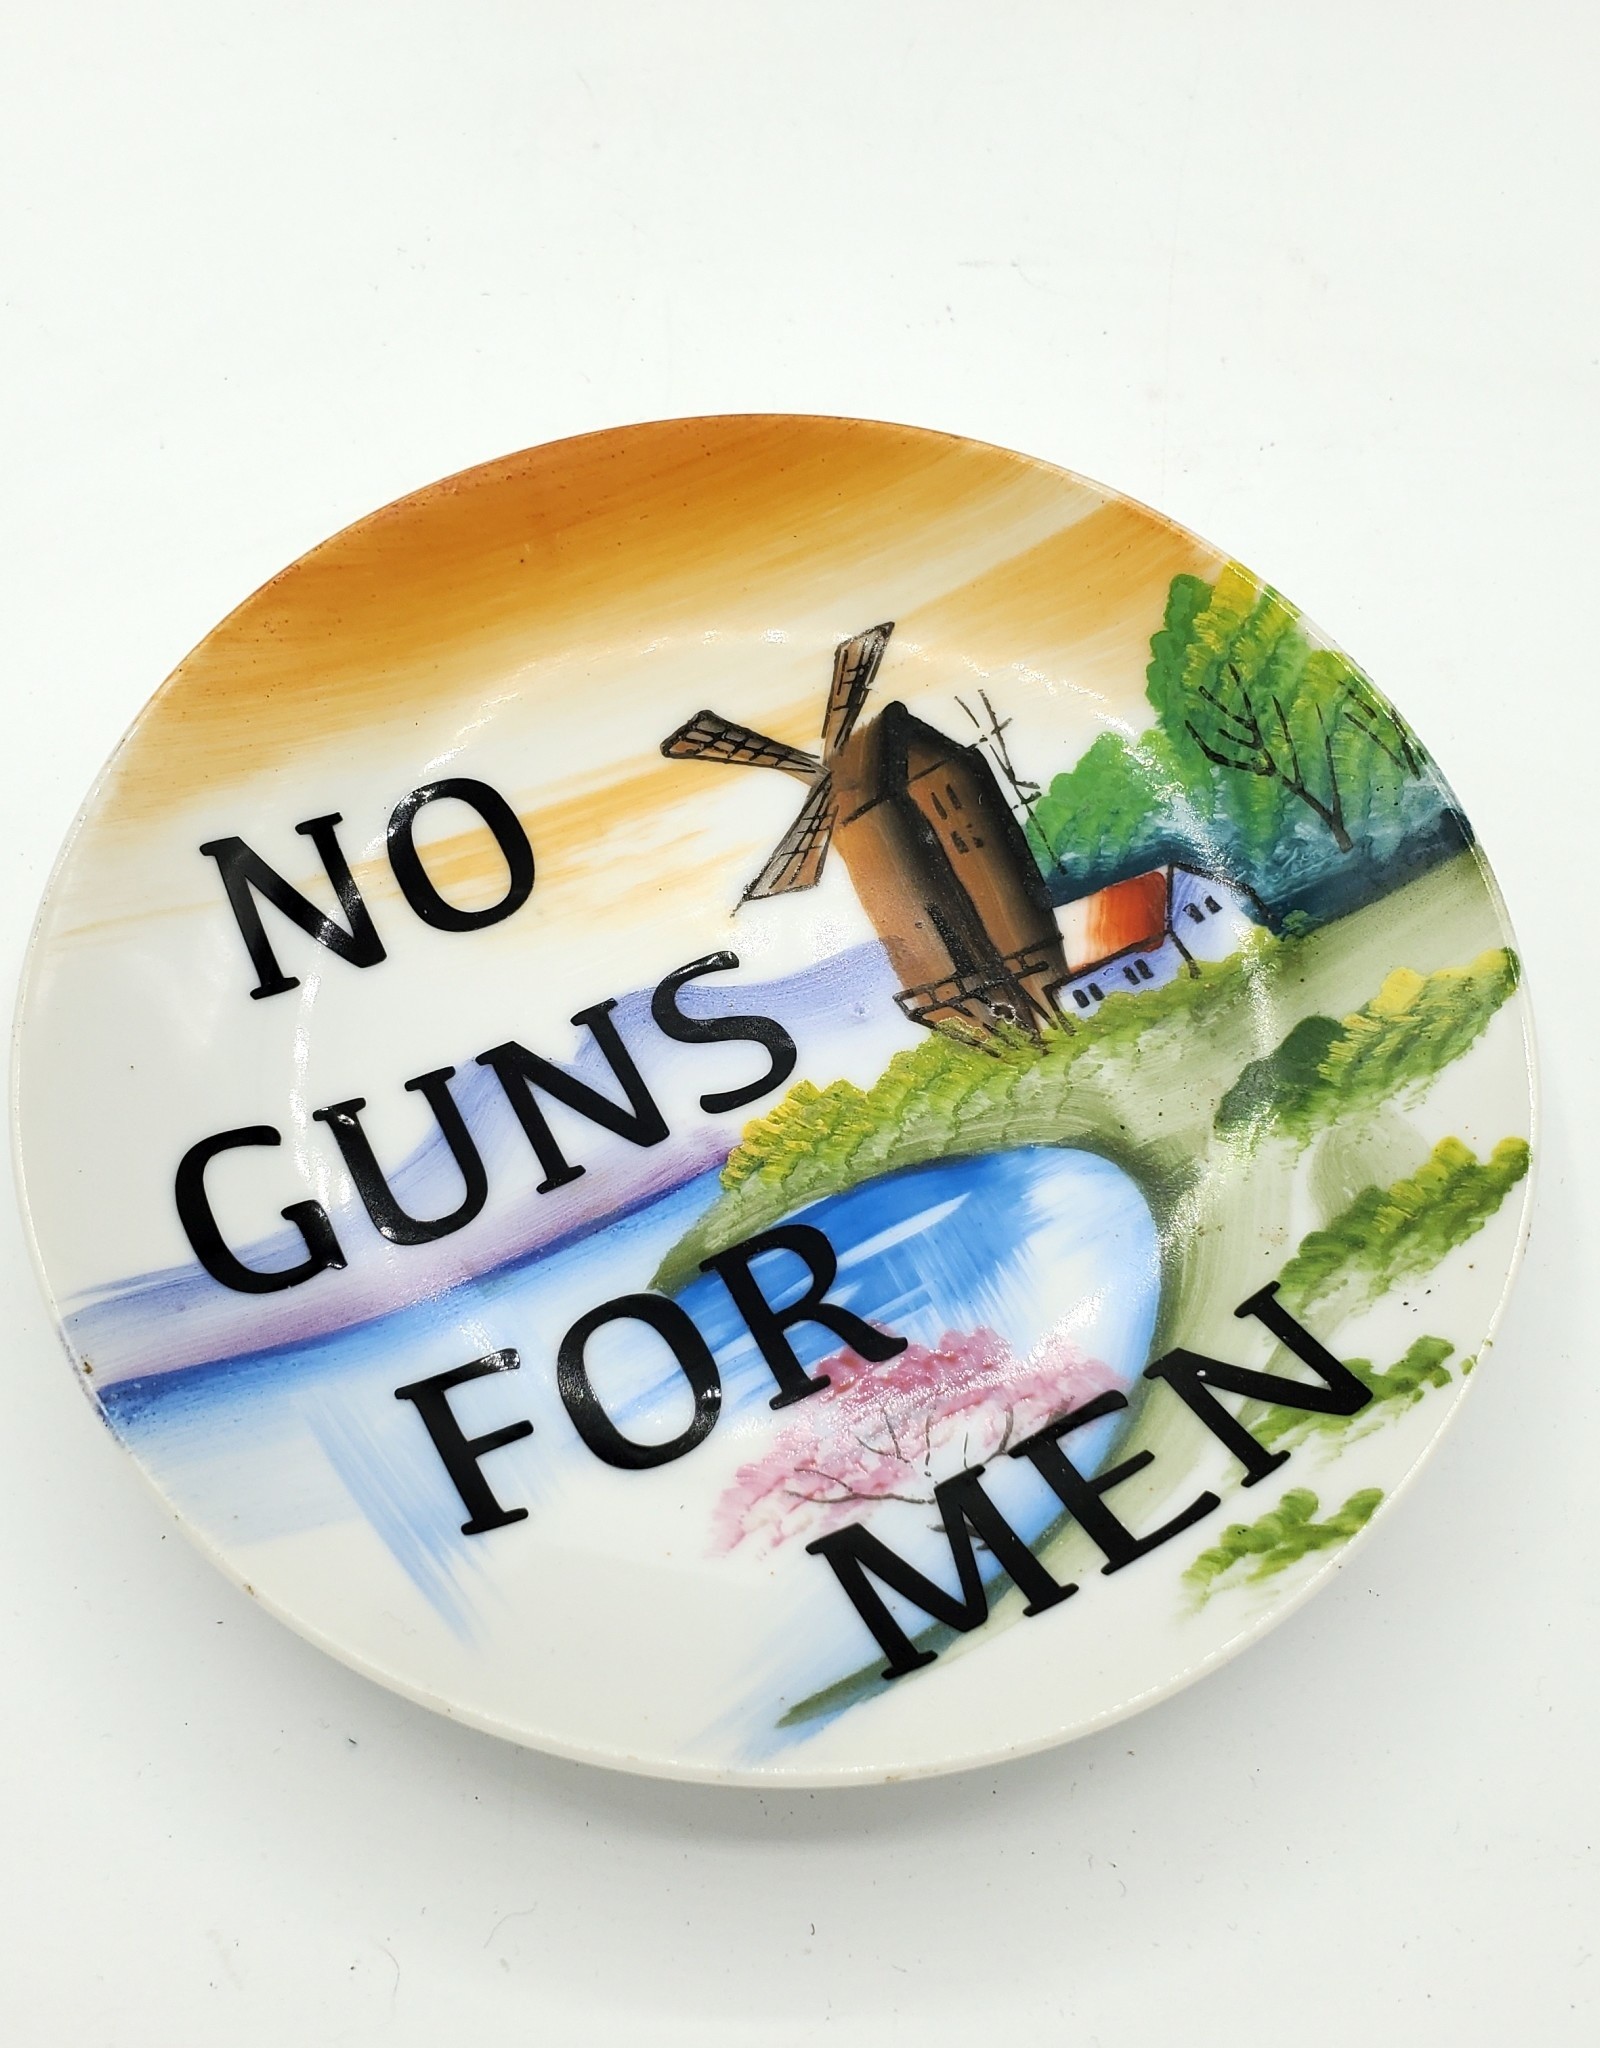 Redux "No Guns For Men" - Vintage Upcycled Plate Art